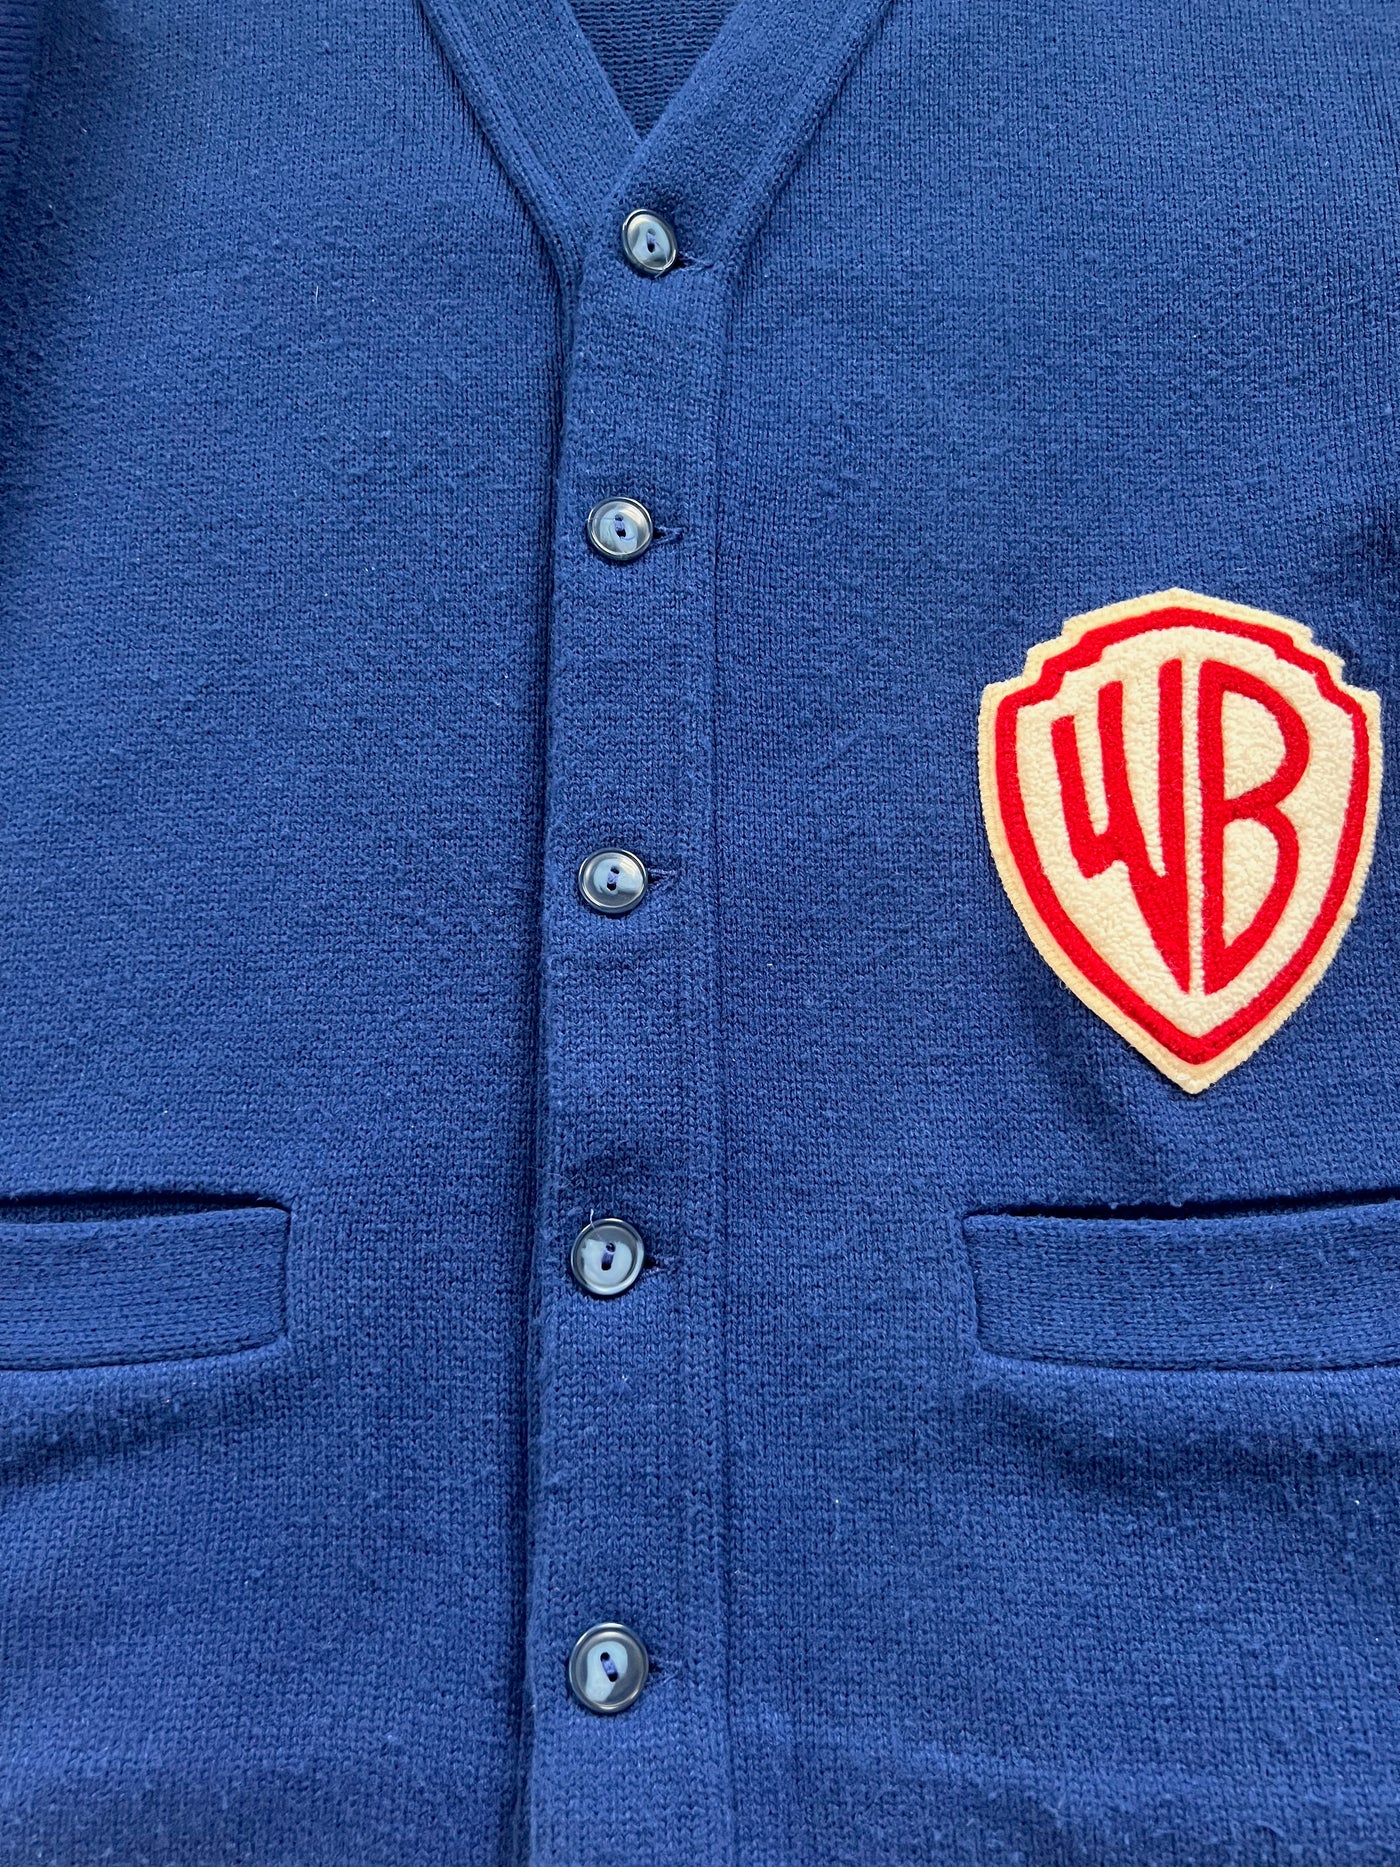 Vintage WB Cardigan sweater. Blue